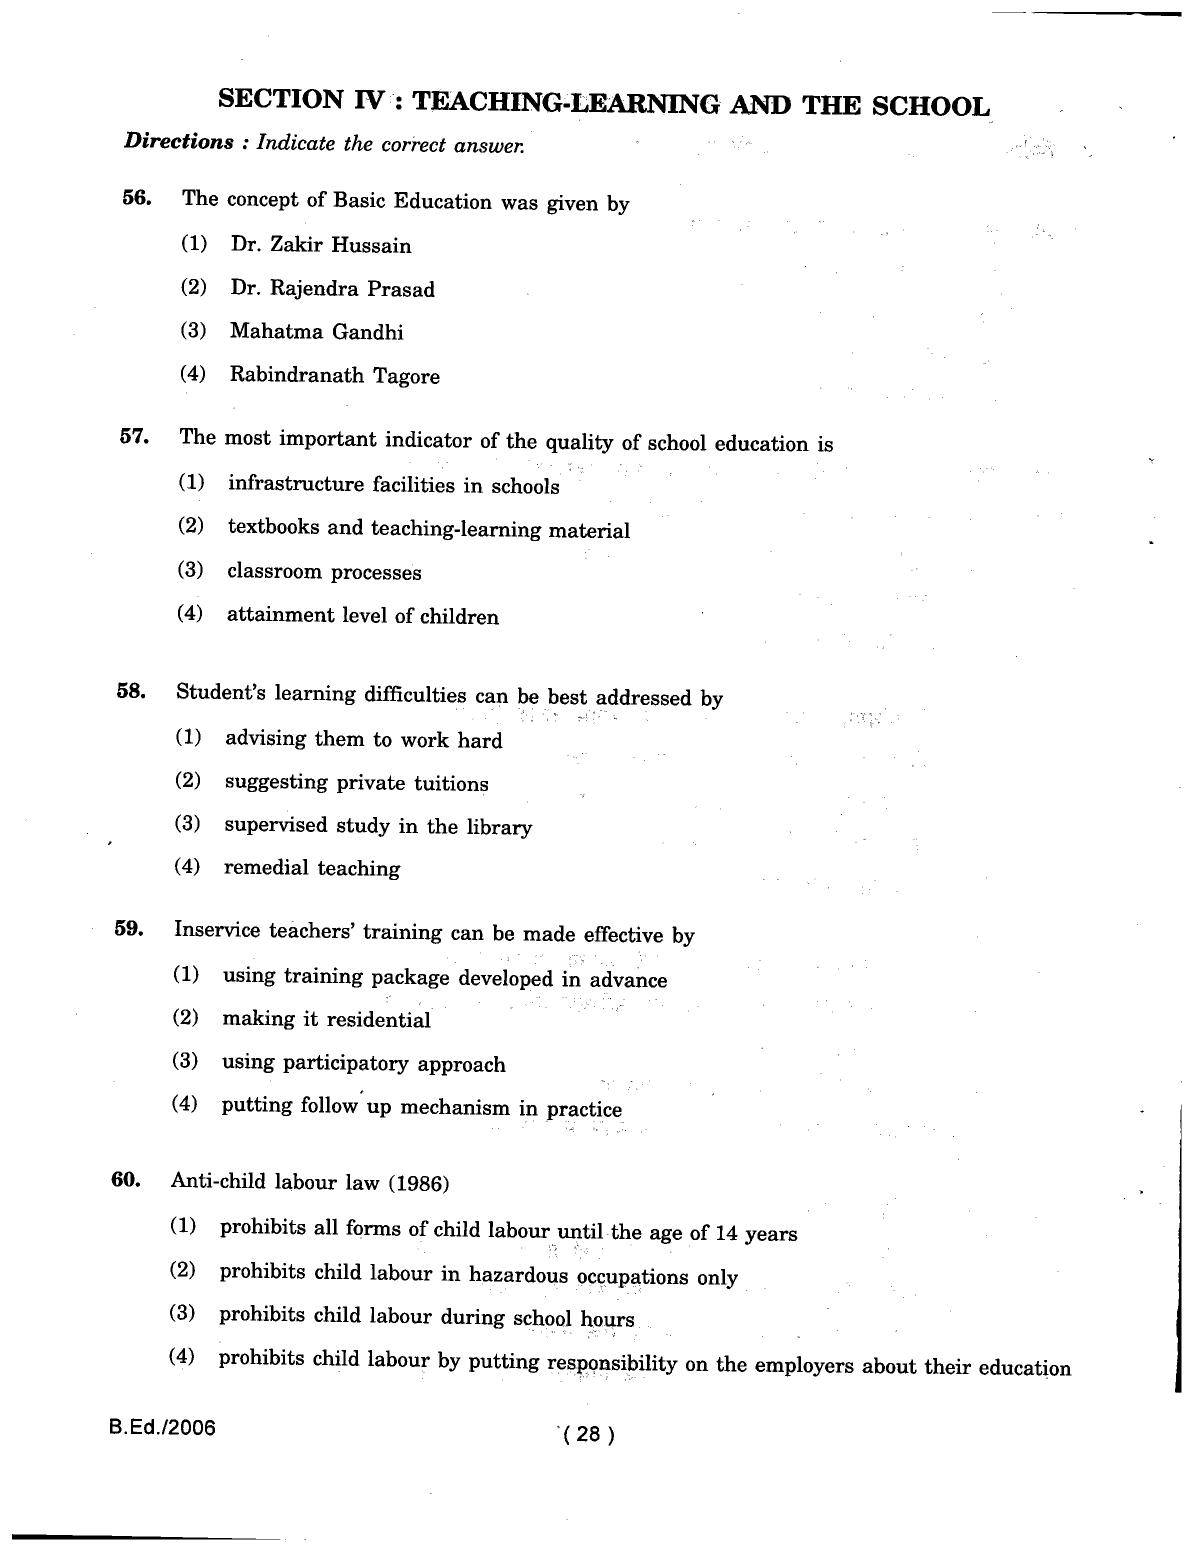 IGNOU B.Ed 2006 Question Paper - Page 28